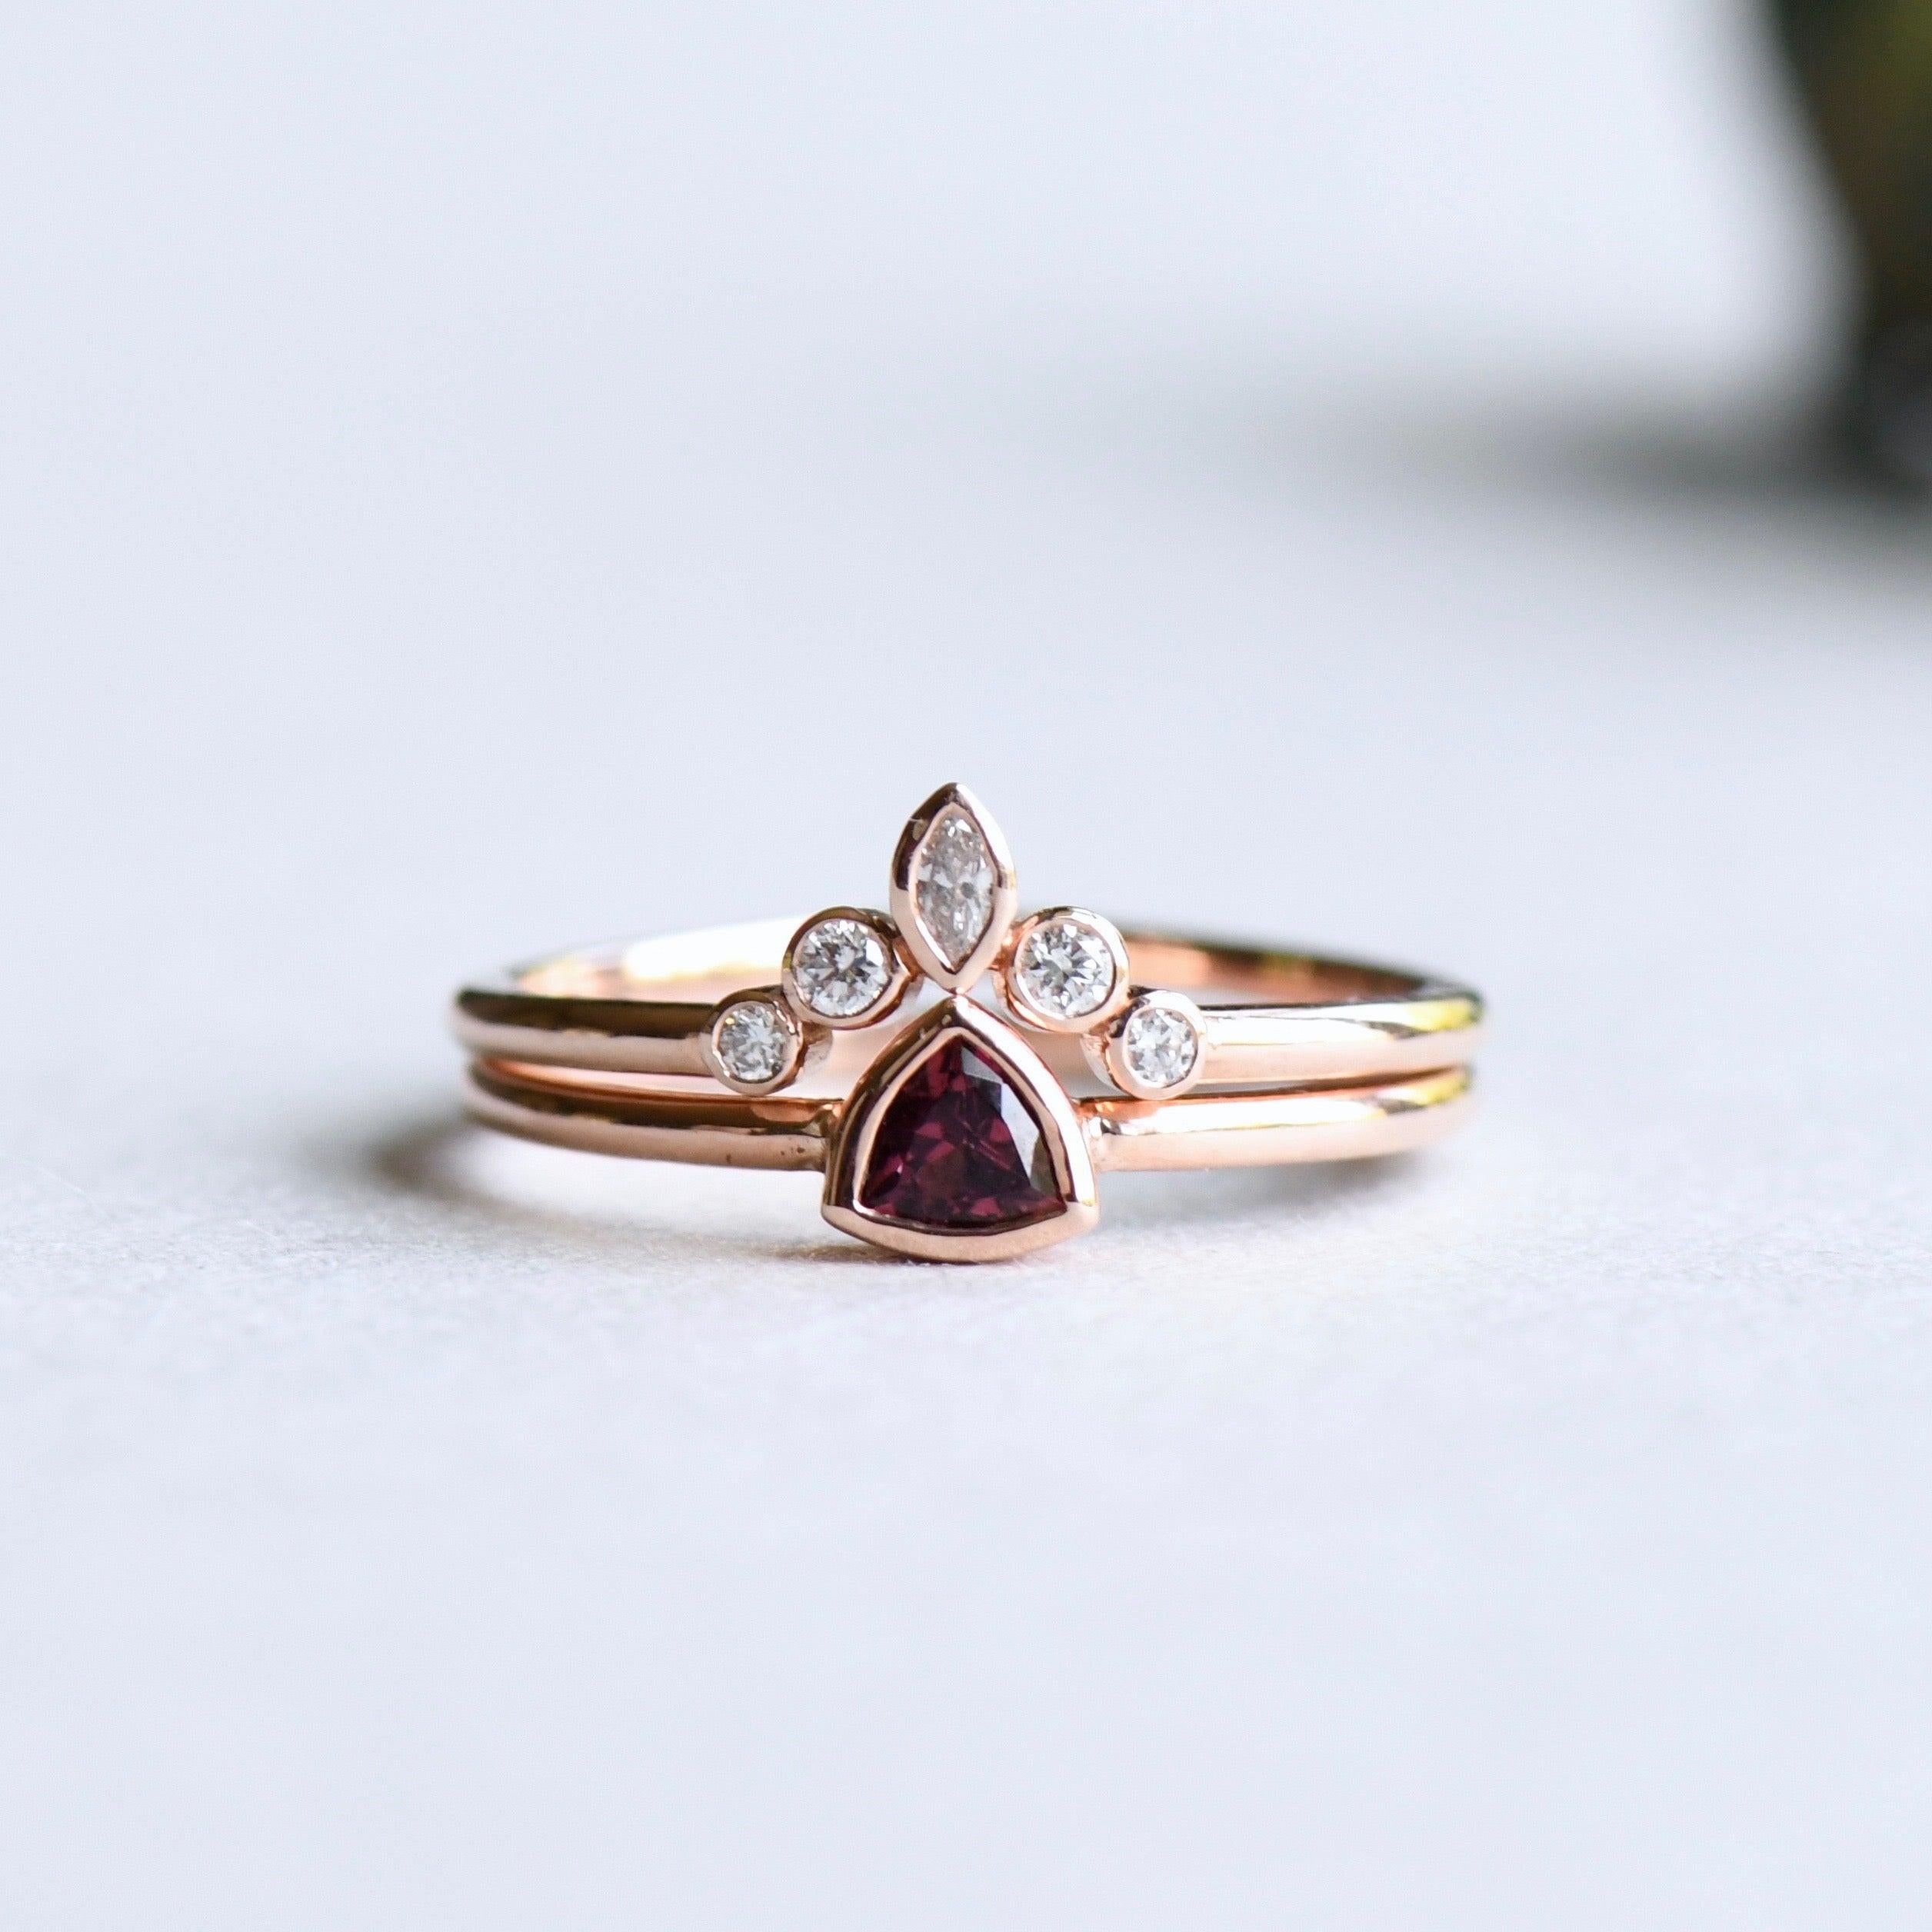 For Sale:  Pink Tourmaline Trillion Ring with Diamond Ring Guard, 14 Karat Rose Gold Ring 5